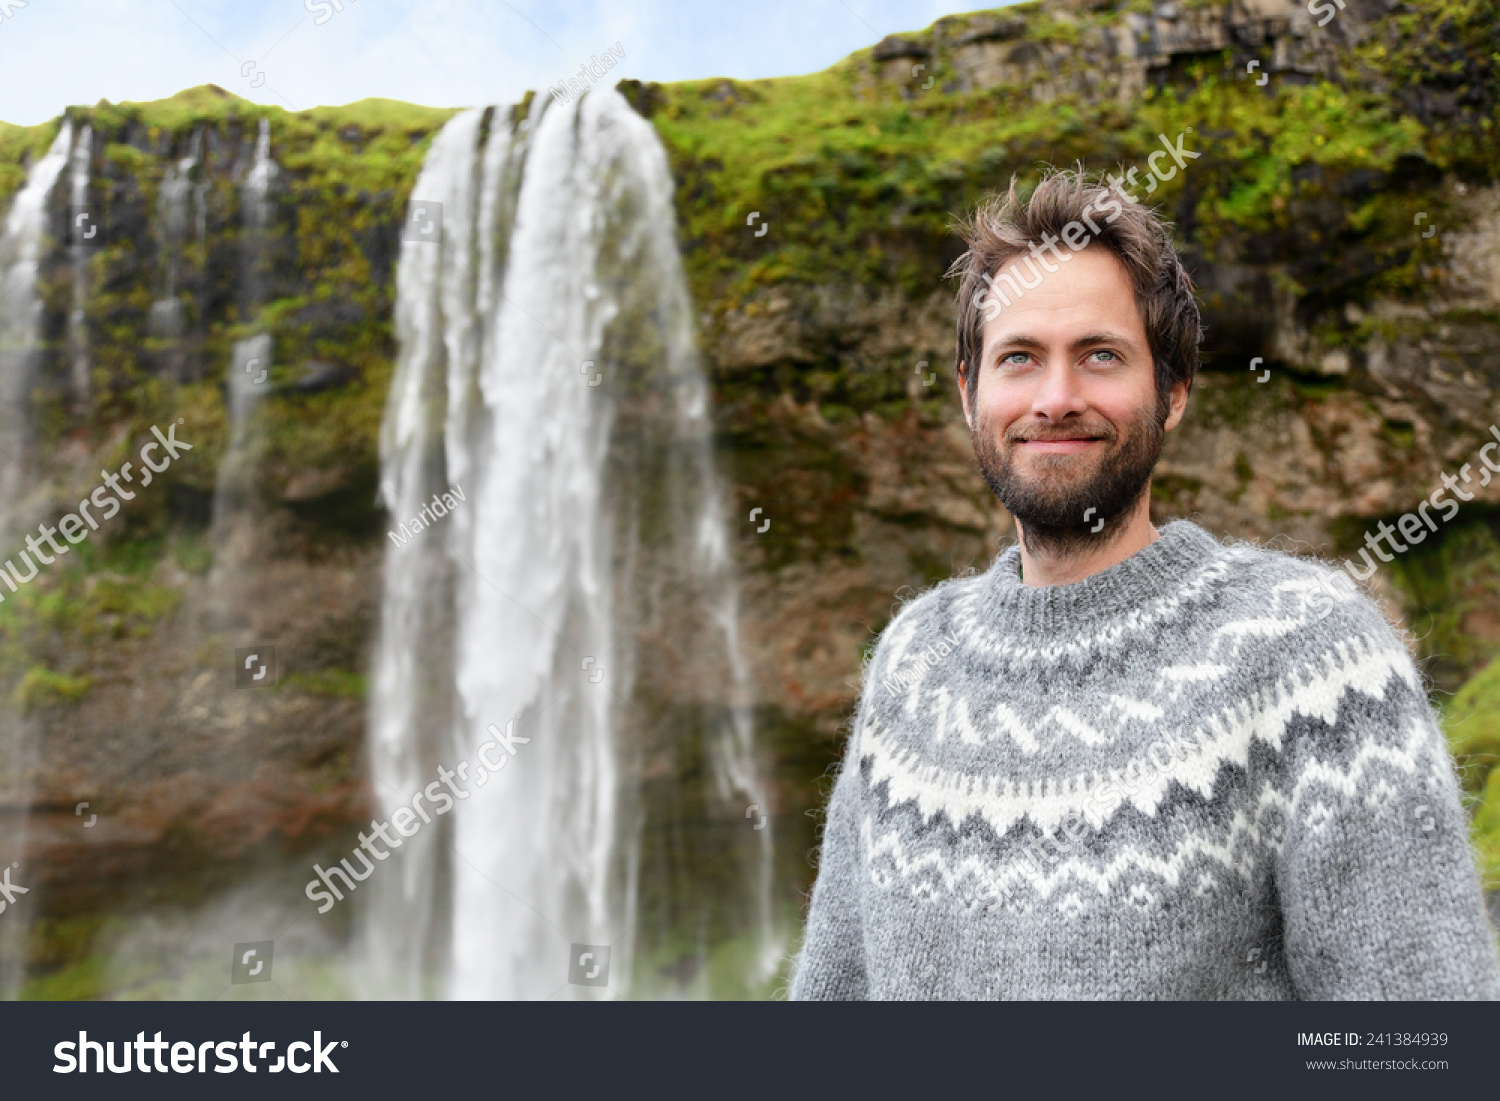 Man Icelandic Sweater By Waterfall On Stock Photo 241384939 - Shutterstock